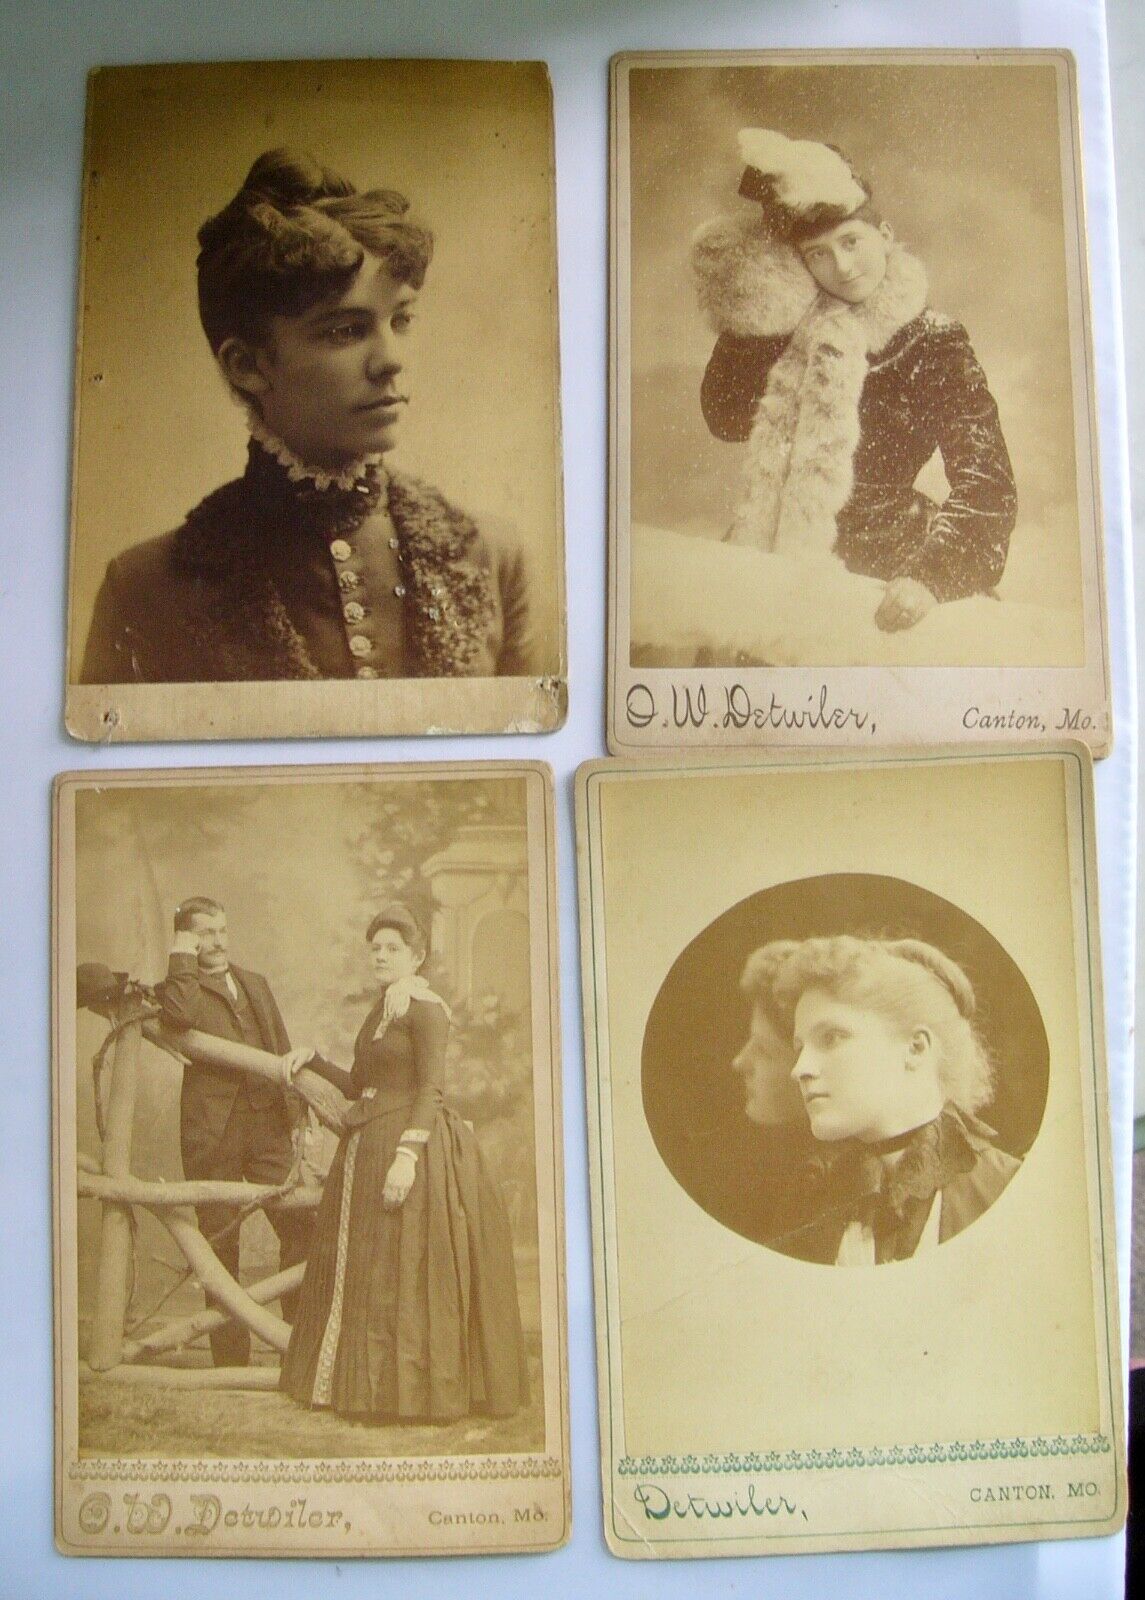 4 Cabinet Cards, O.W. Detwiler, Canton, Missouri